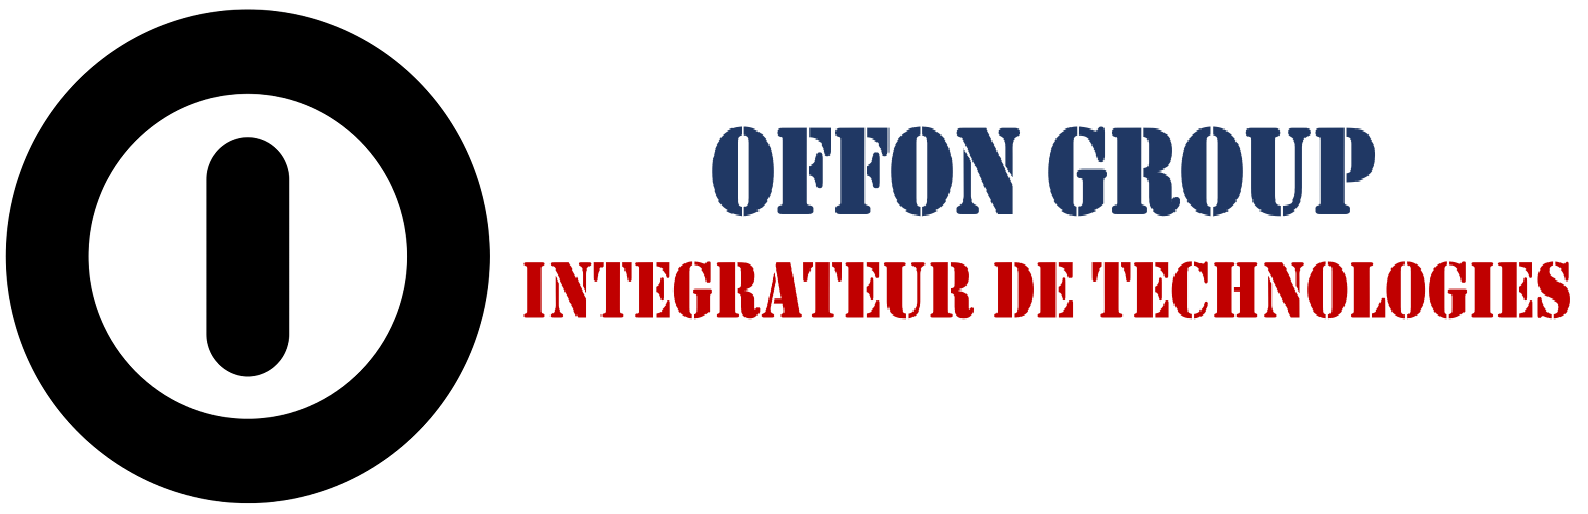 Offon Group